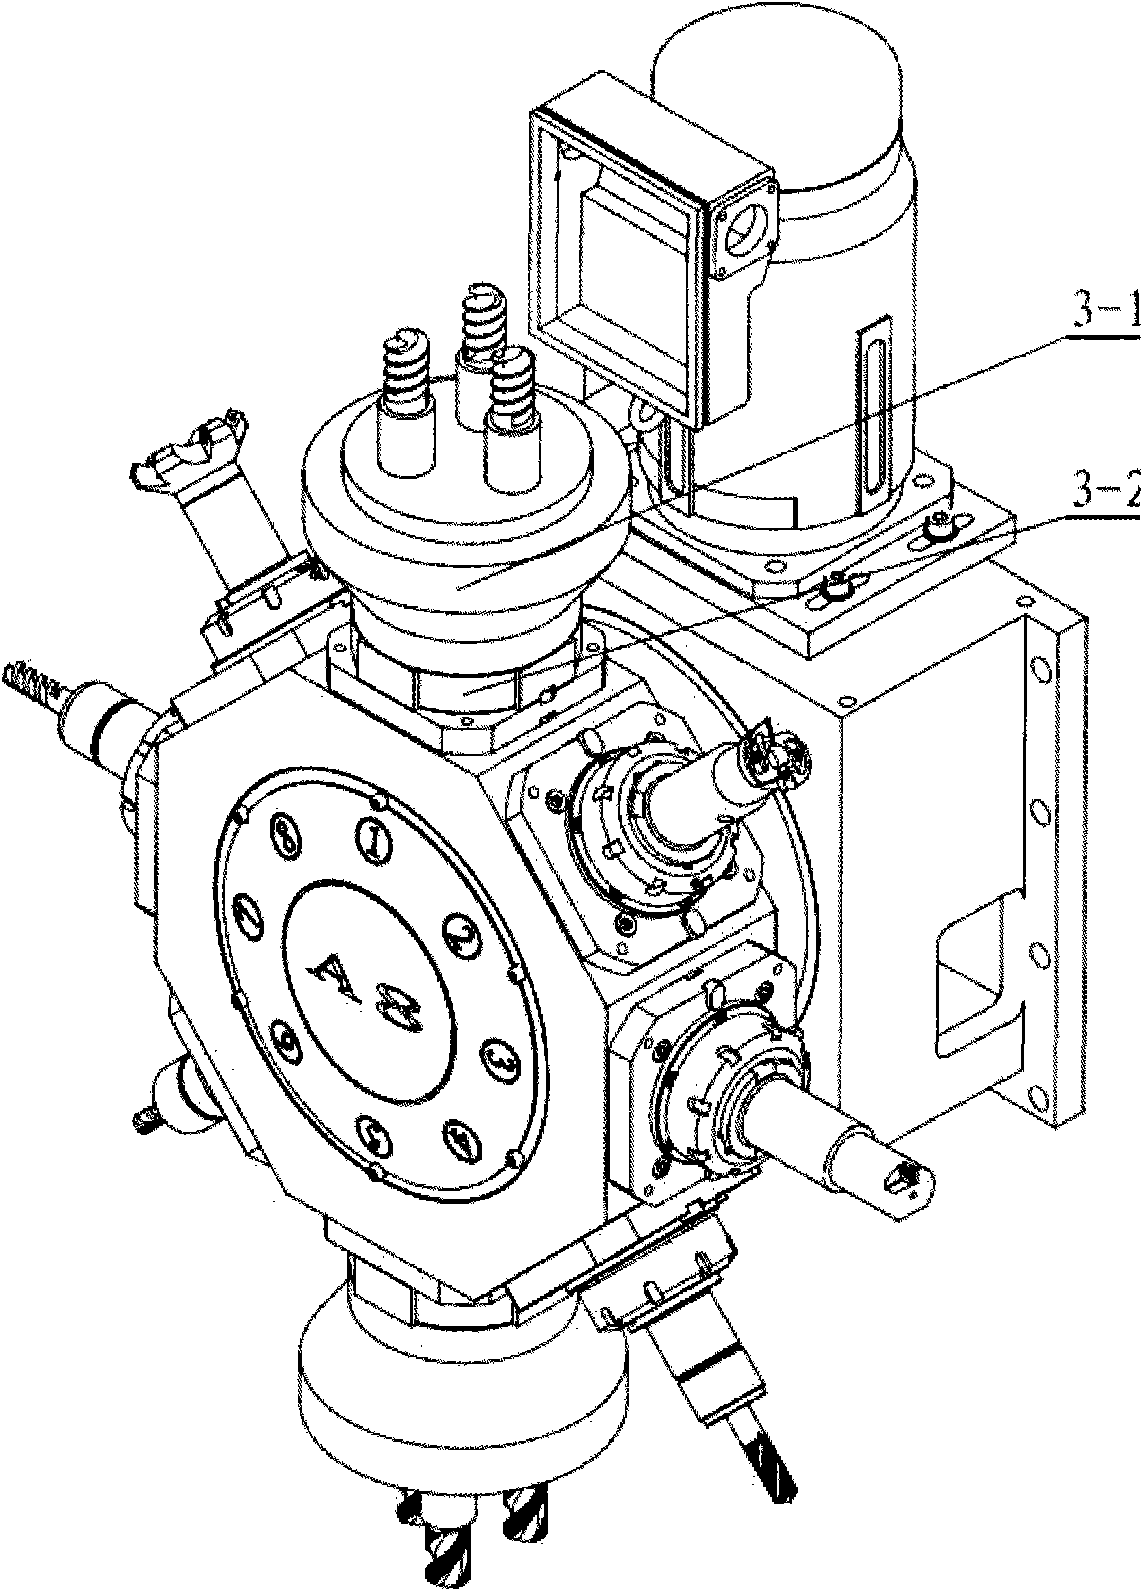 Rotary tool turret and rotation method